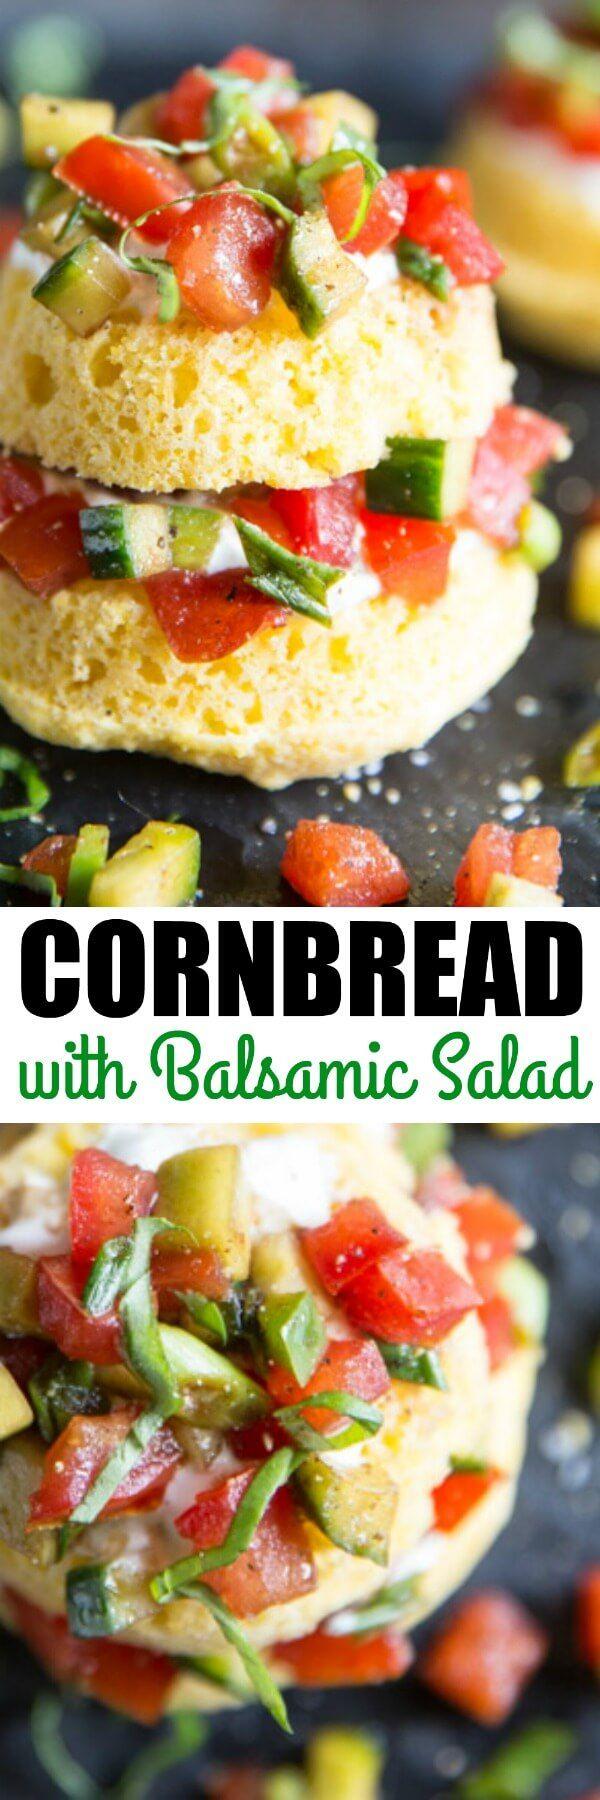 Wedding - Cornbread Cakes With Balsamic Tomato Salad